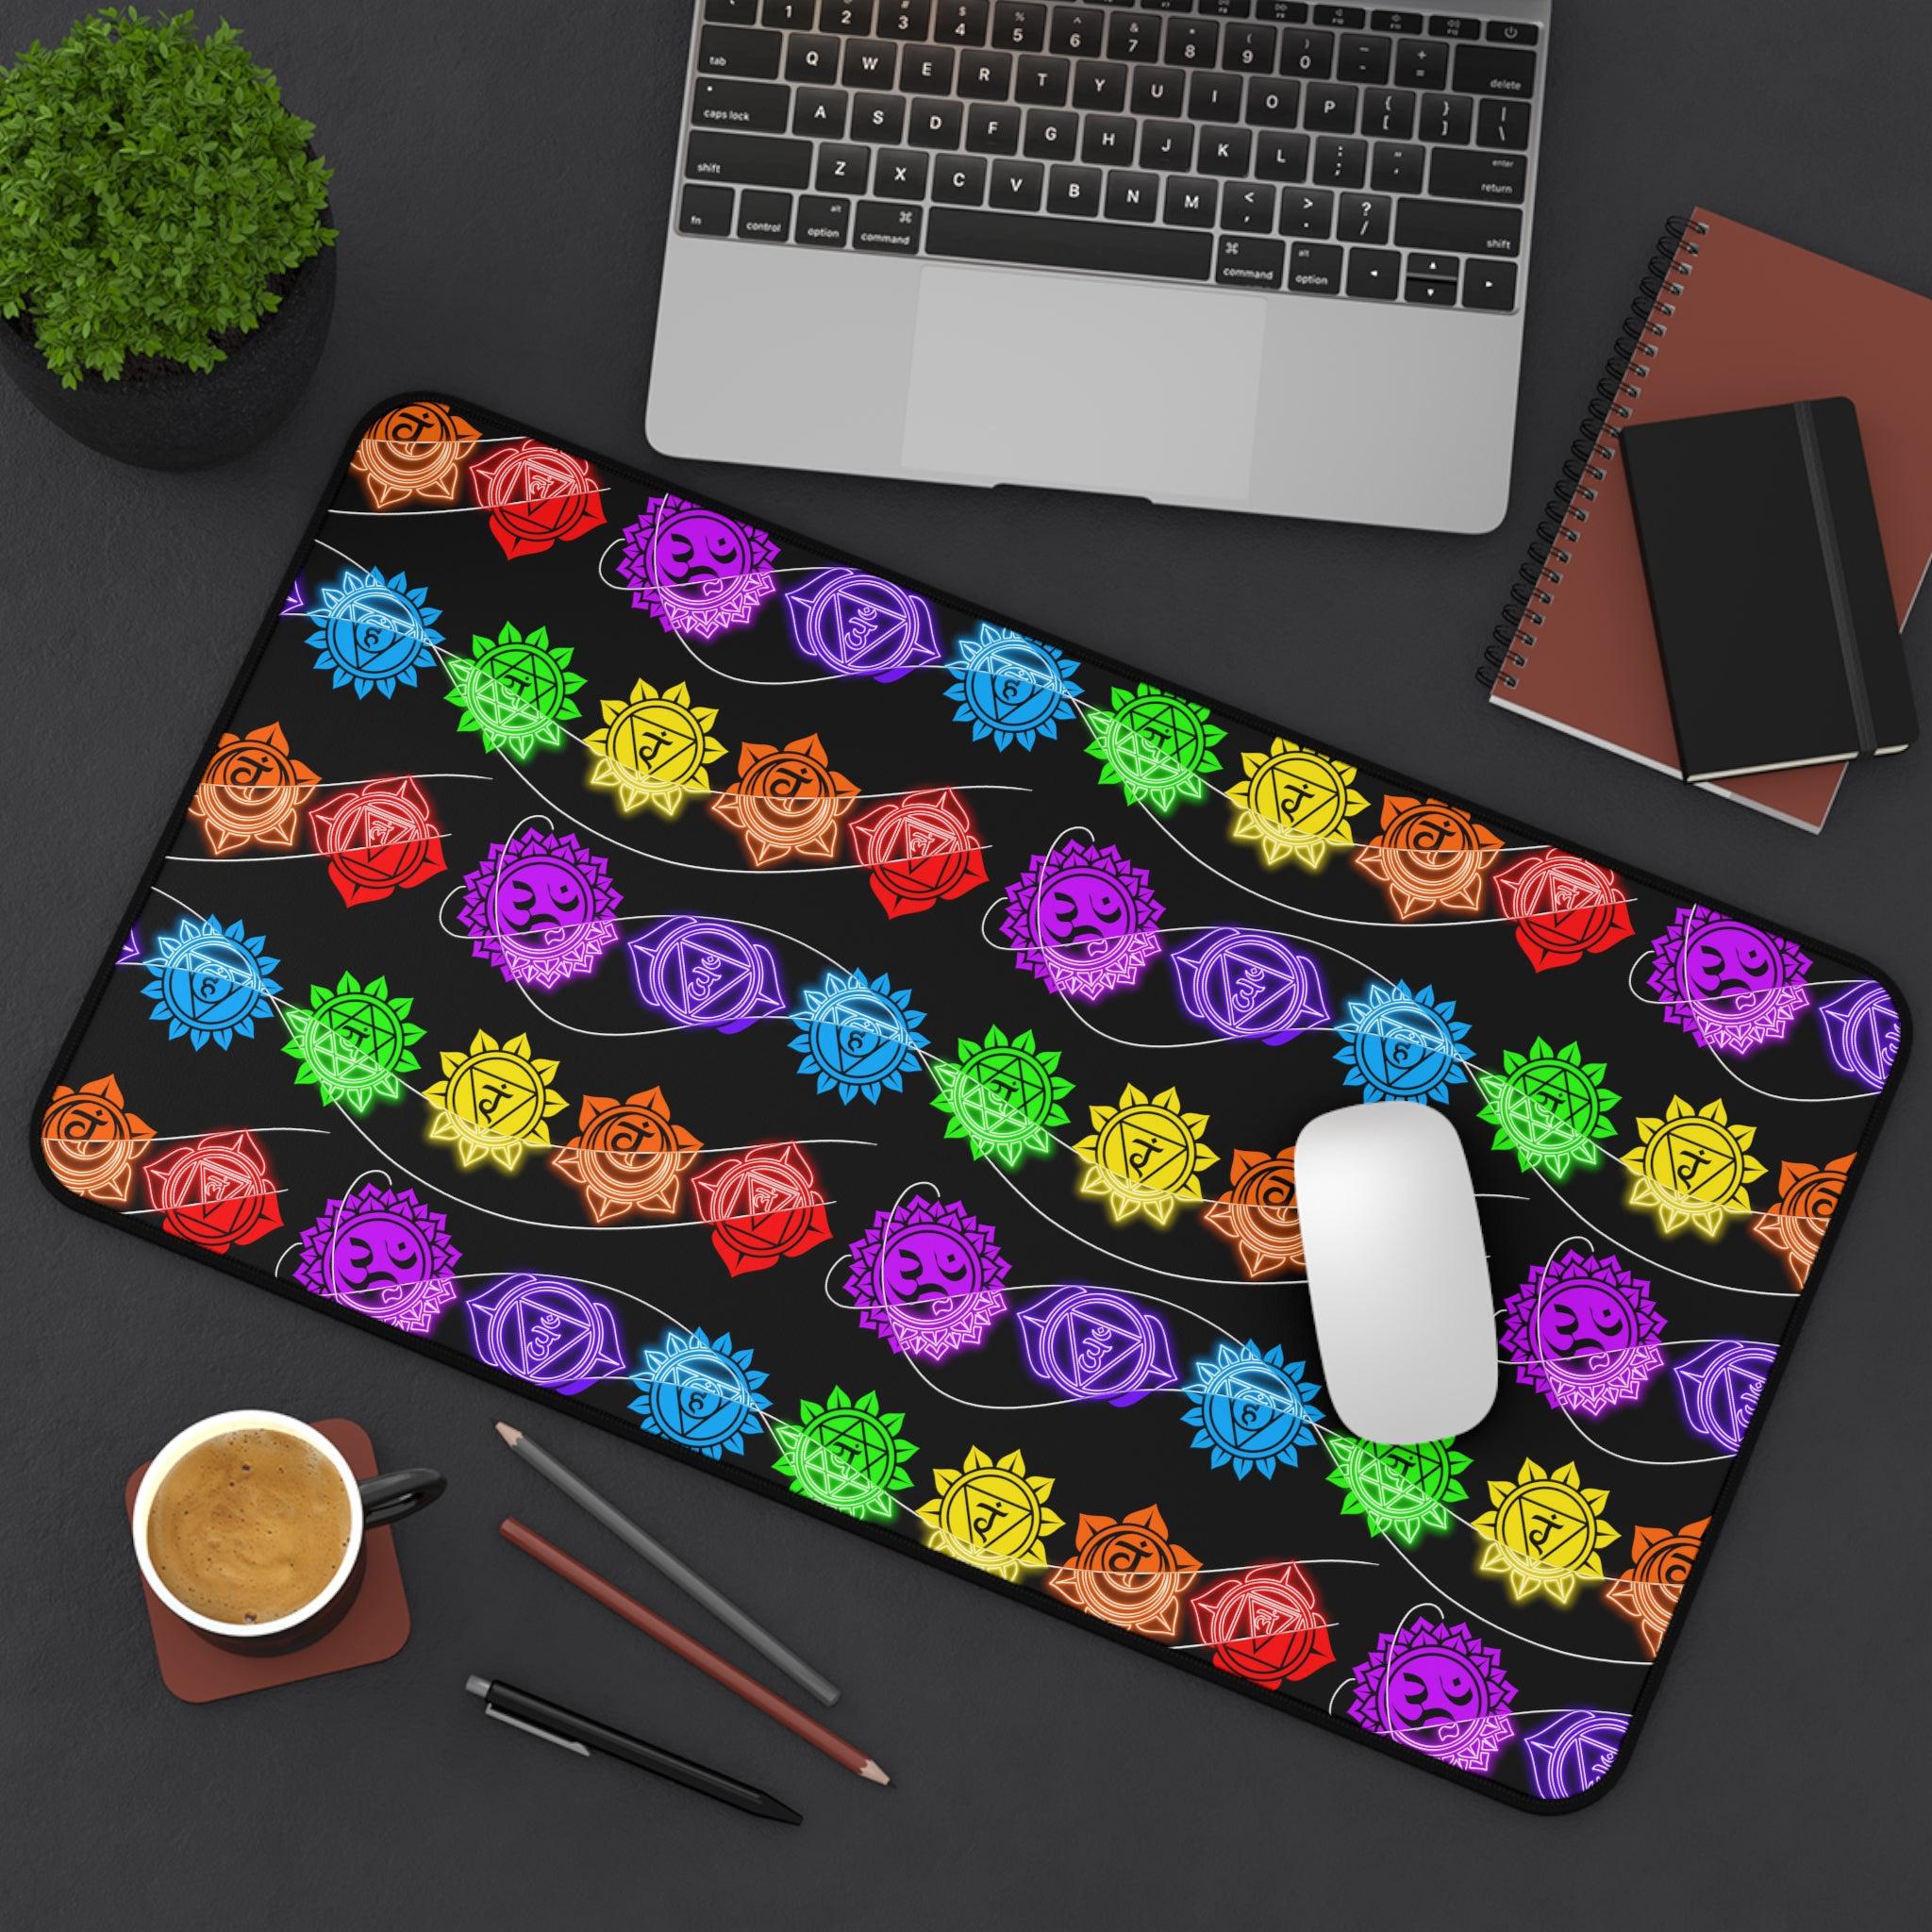 Chakra Mouse Pad / Desk Mat (Version 2)